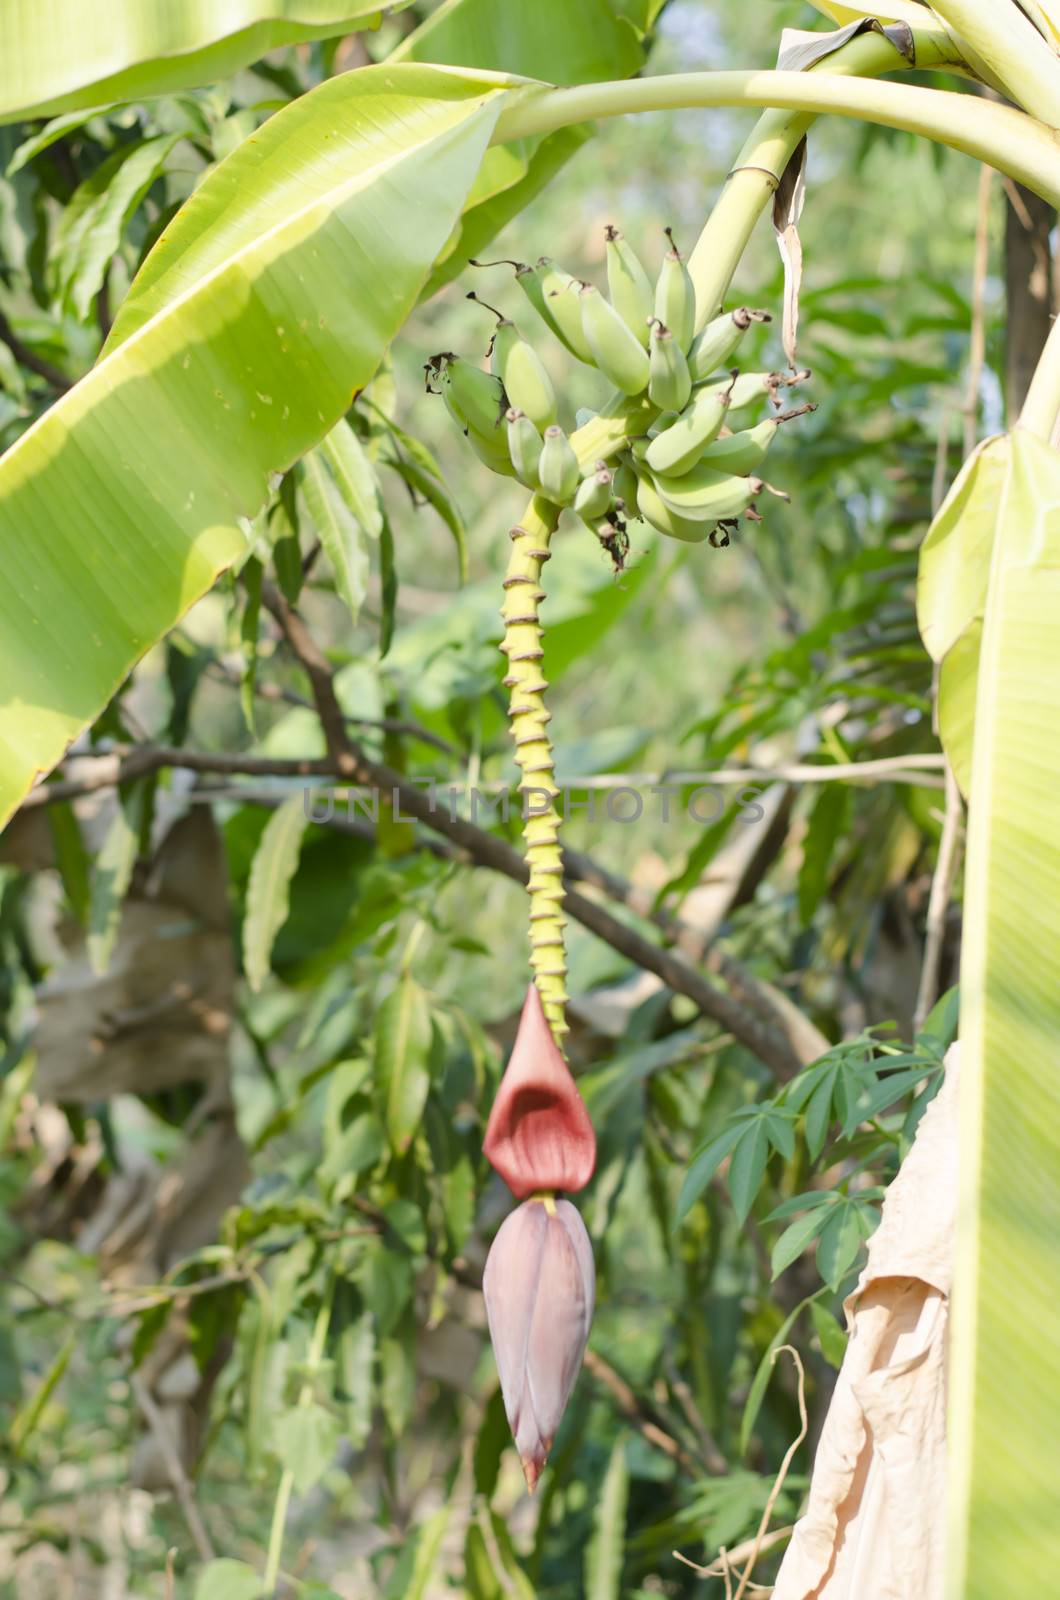 Banana Bud on banana tree